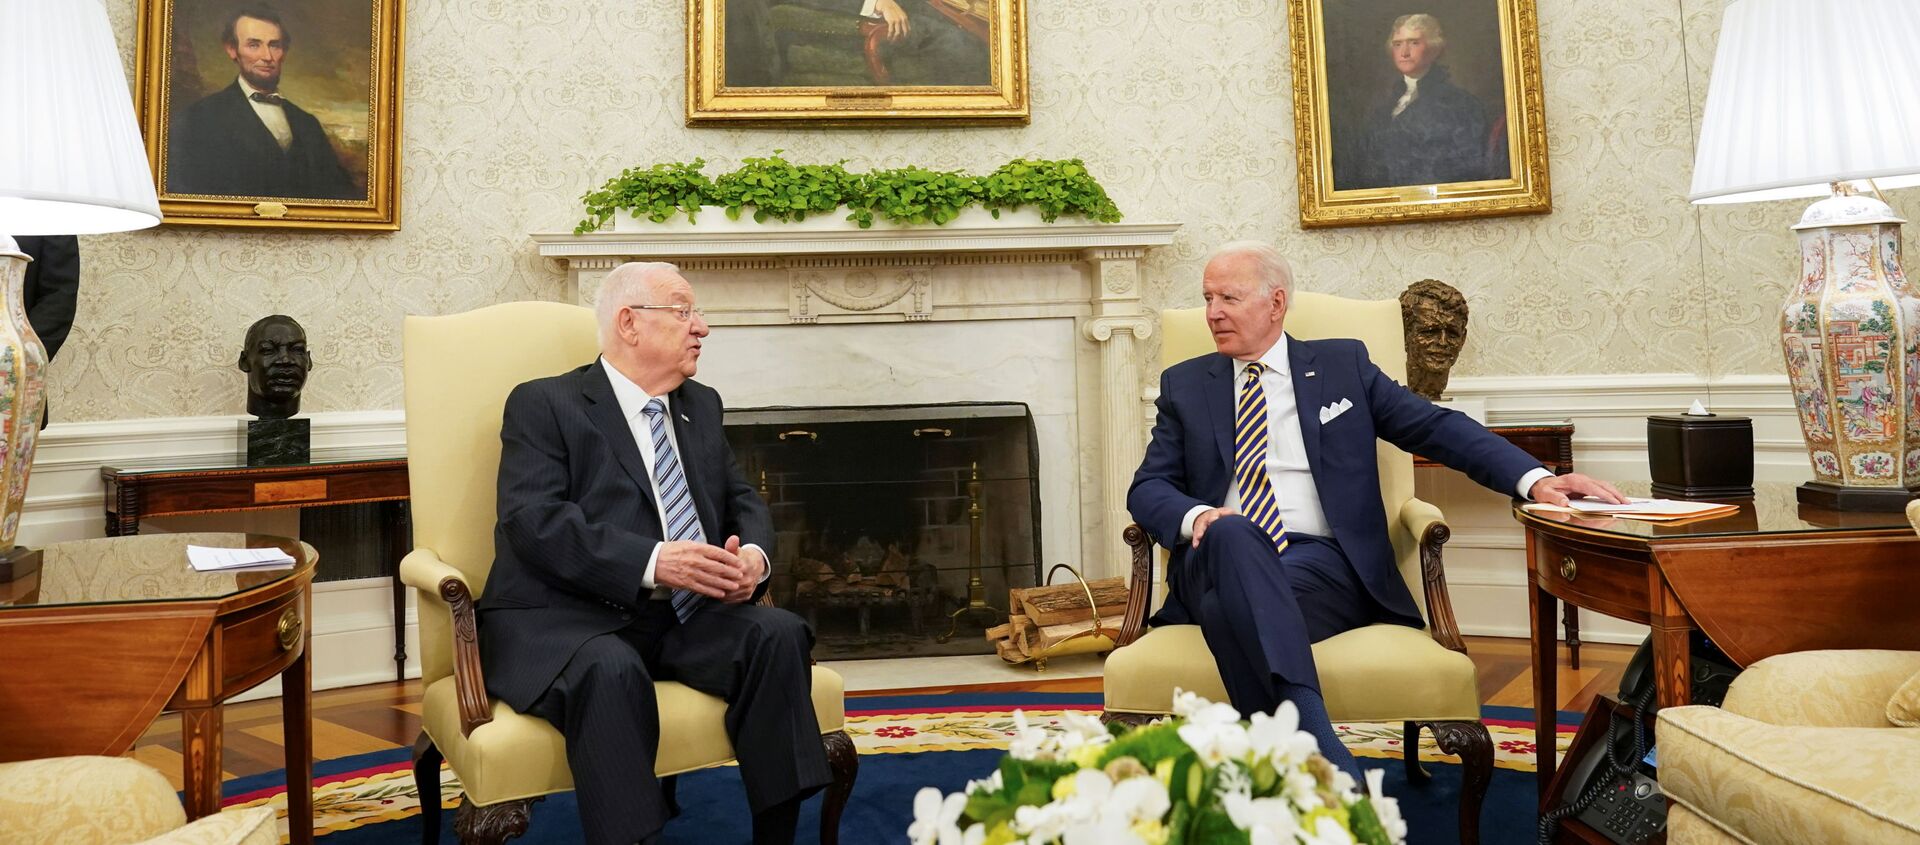 U.S. President Joe Biden meets with Israel's President Reuven Rivlin at the White House in Washington, U.S. June 28, 2021 - Sputnik International, 1920, 29.06.2021